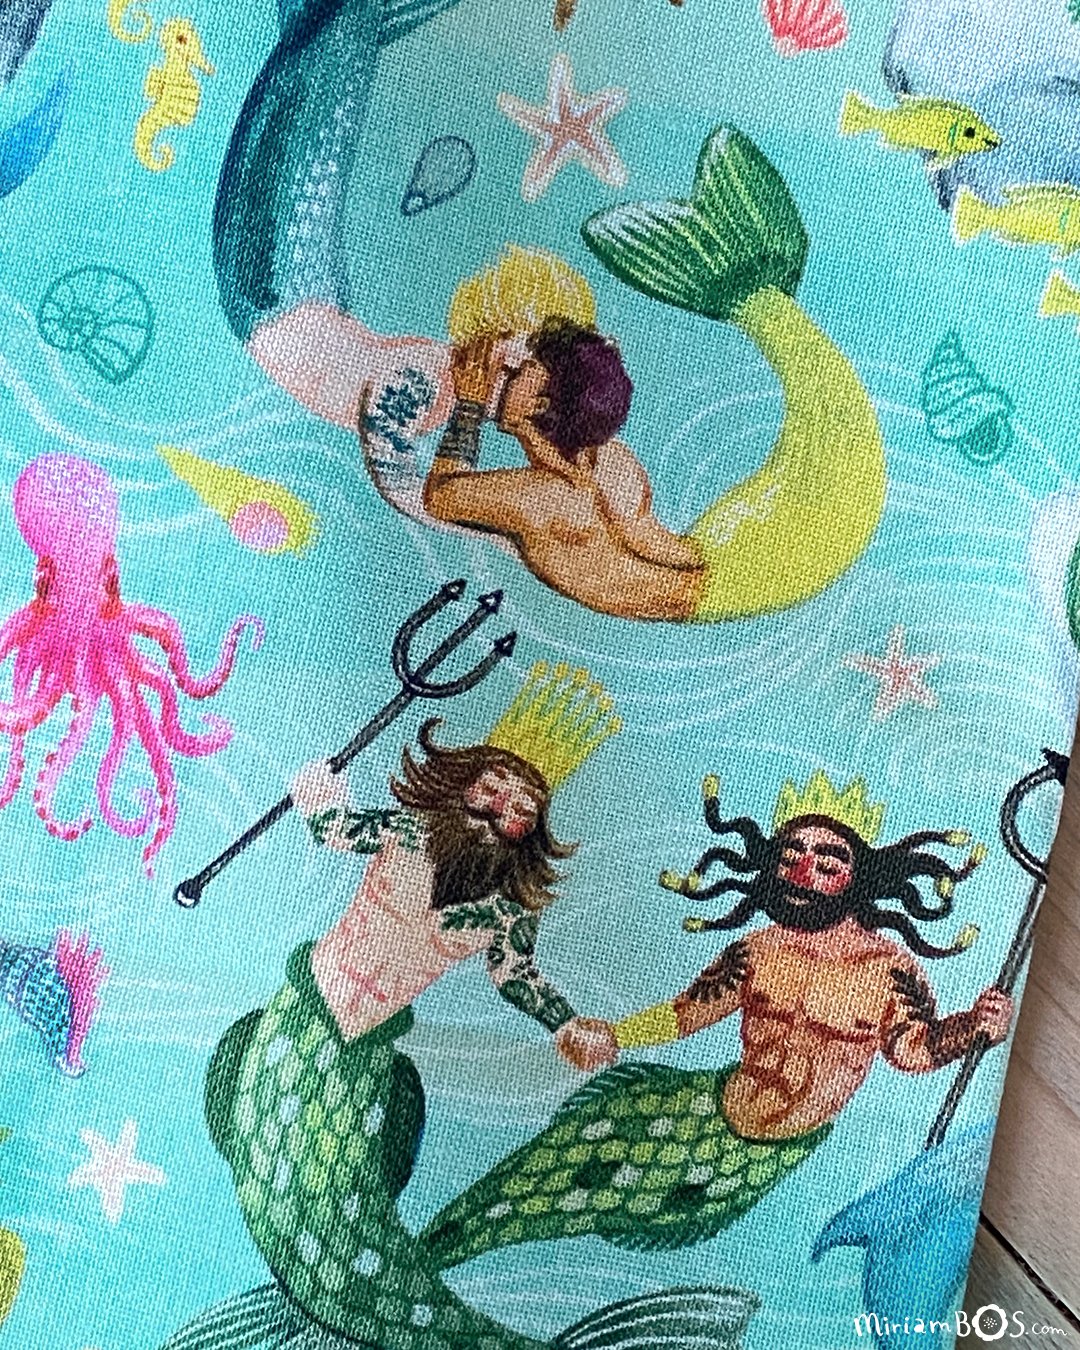 Mermaid with Moons Constellations Fabric by Dear Stella - modeS4u